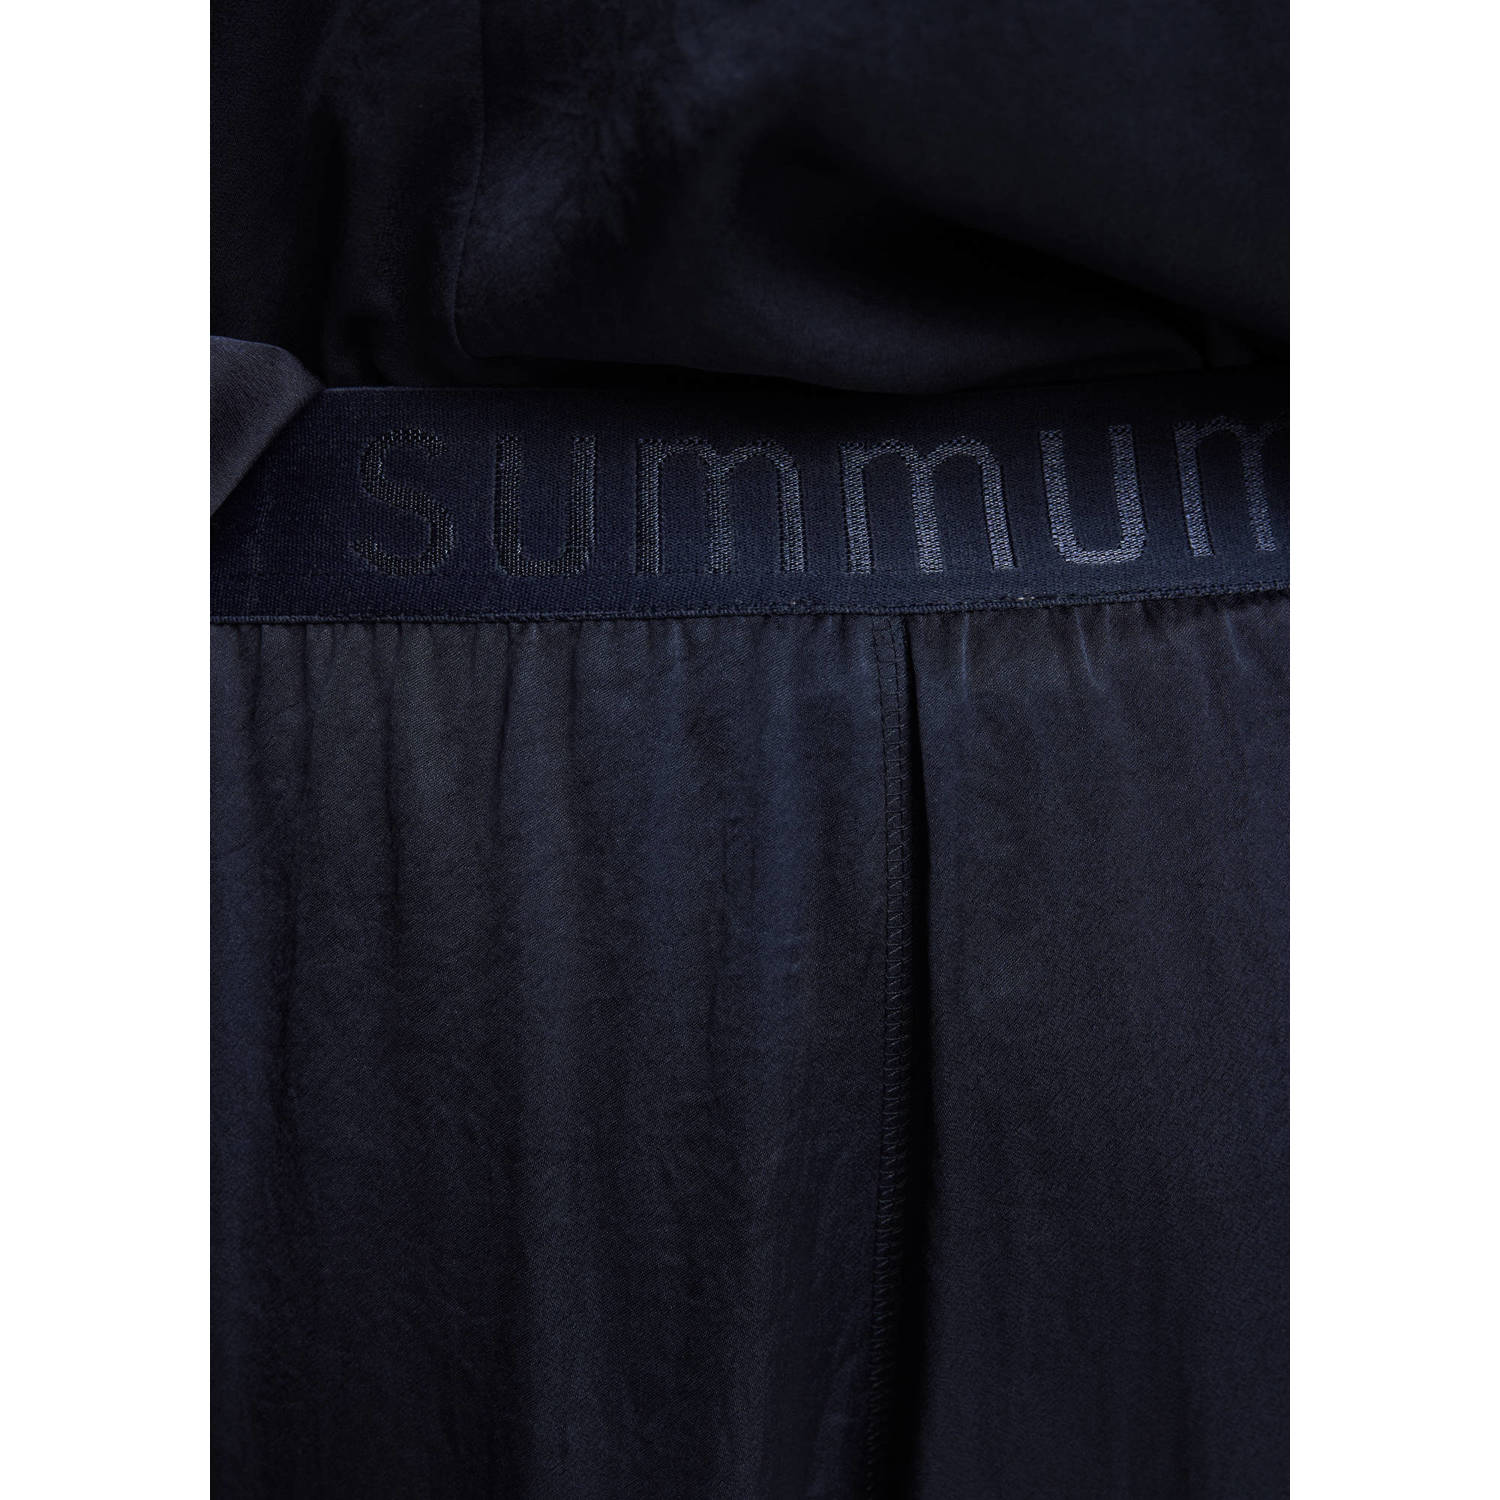 Summum maxi rok donkerblauw